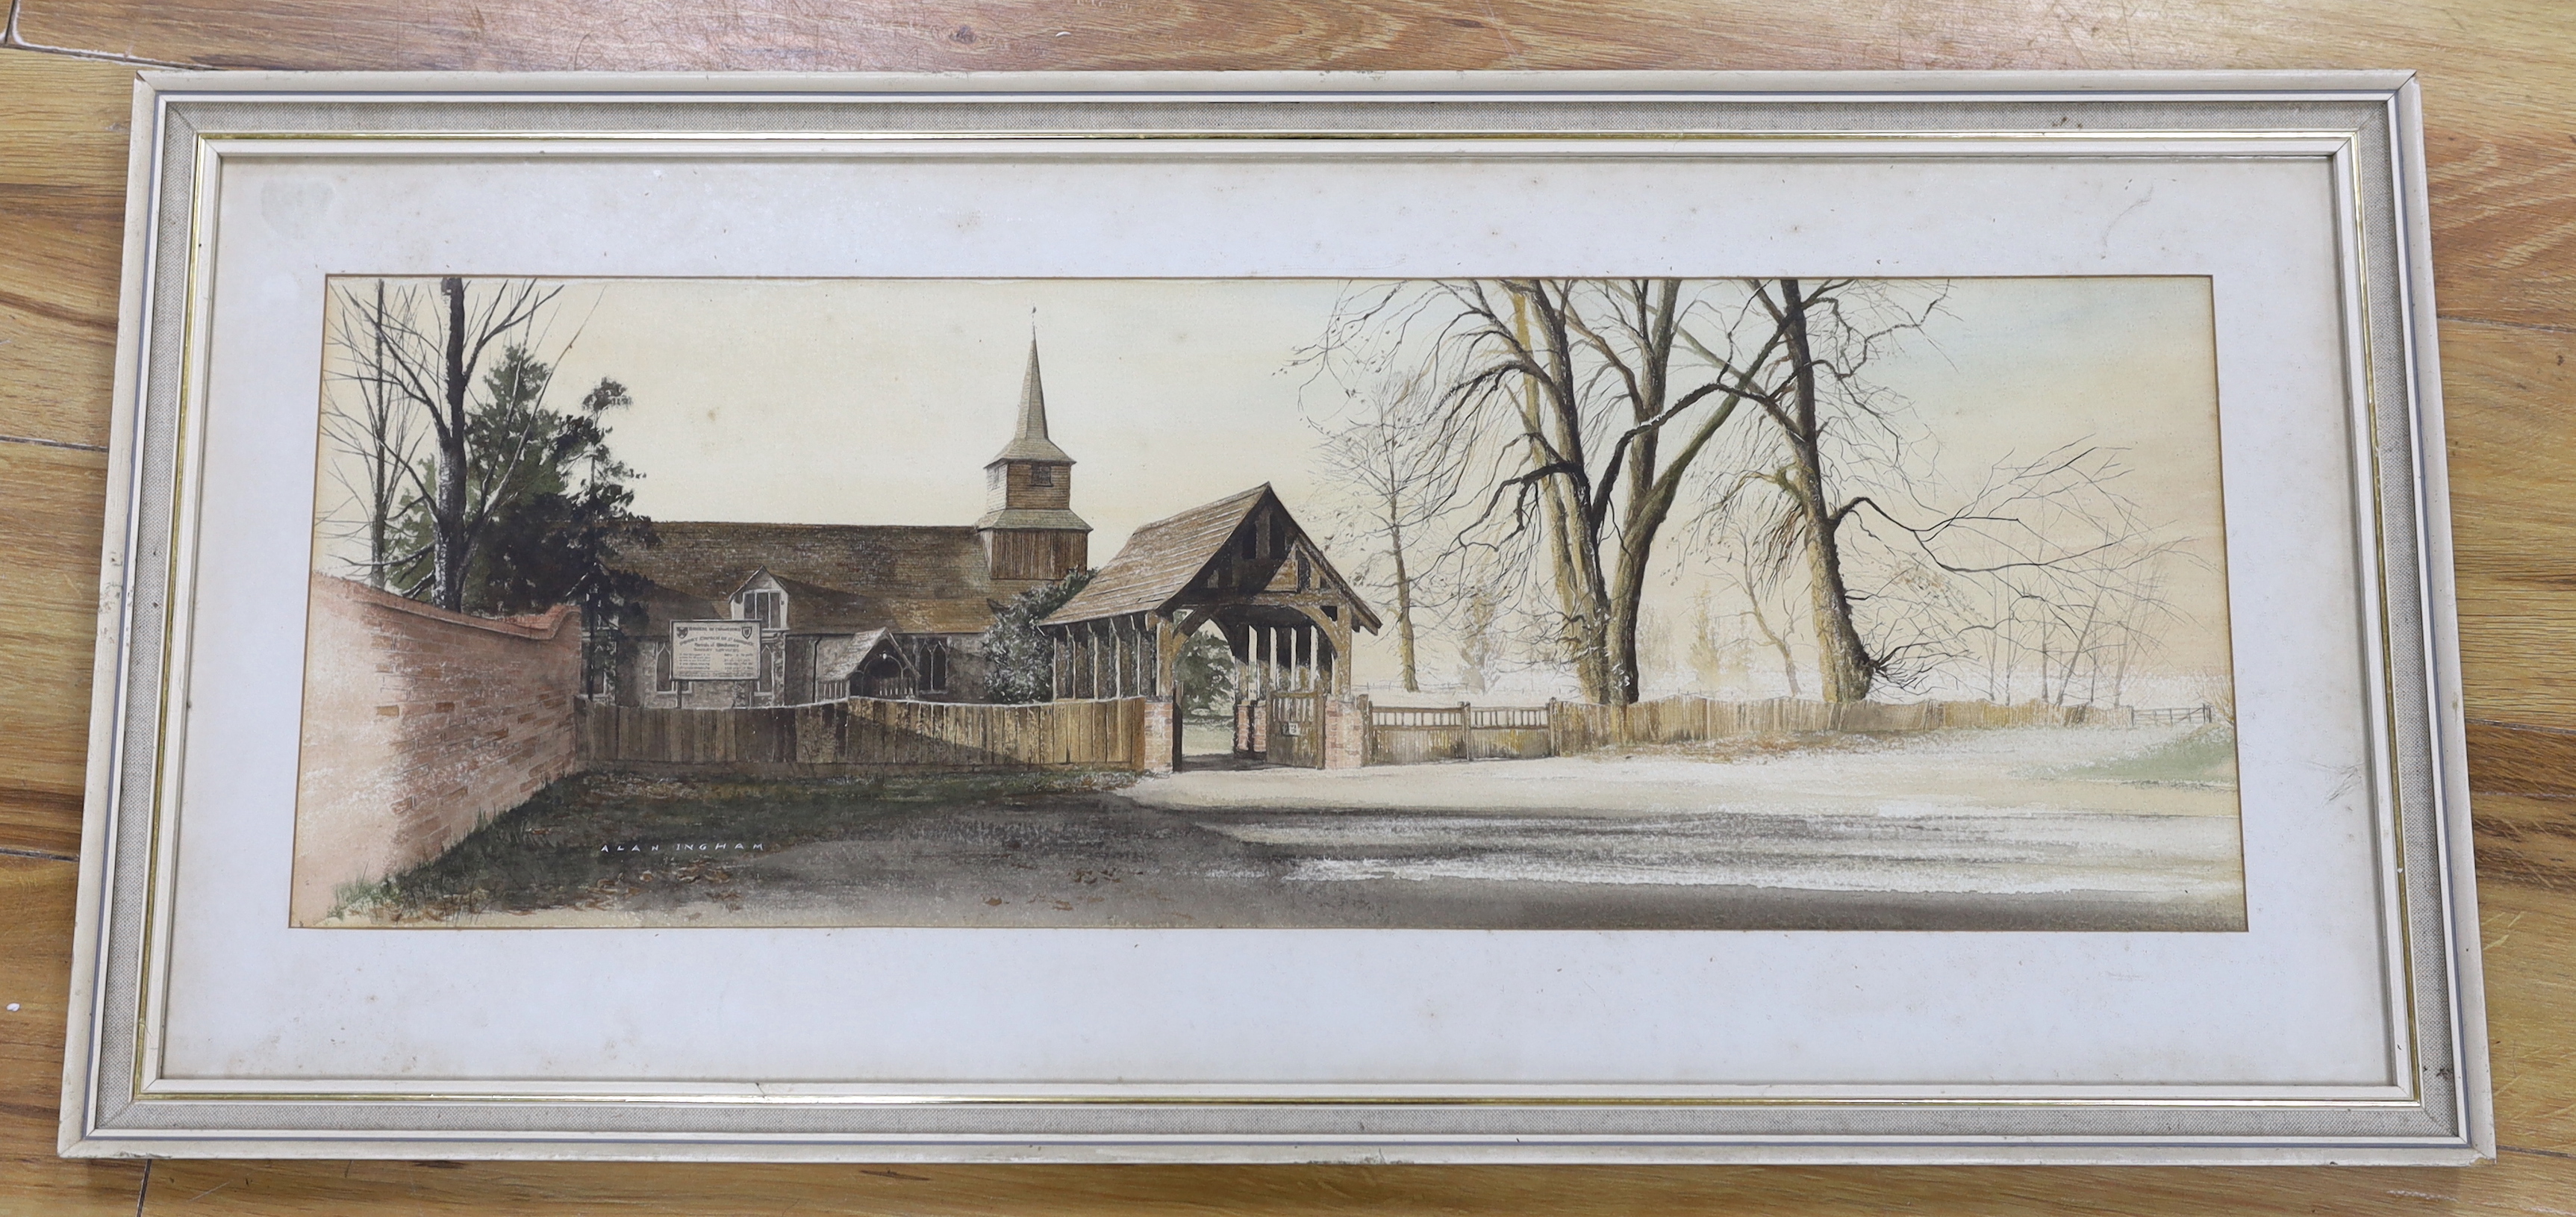 Alan Ingham (1932-2002), watercolour, ‘Blackmore Church, Essex’, signed, 25 x 73cm